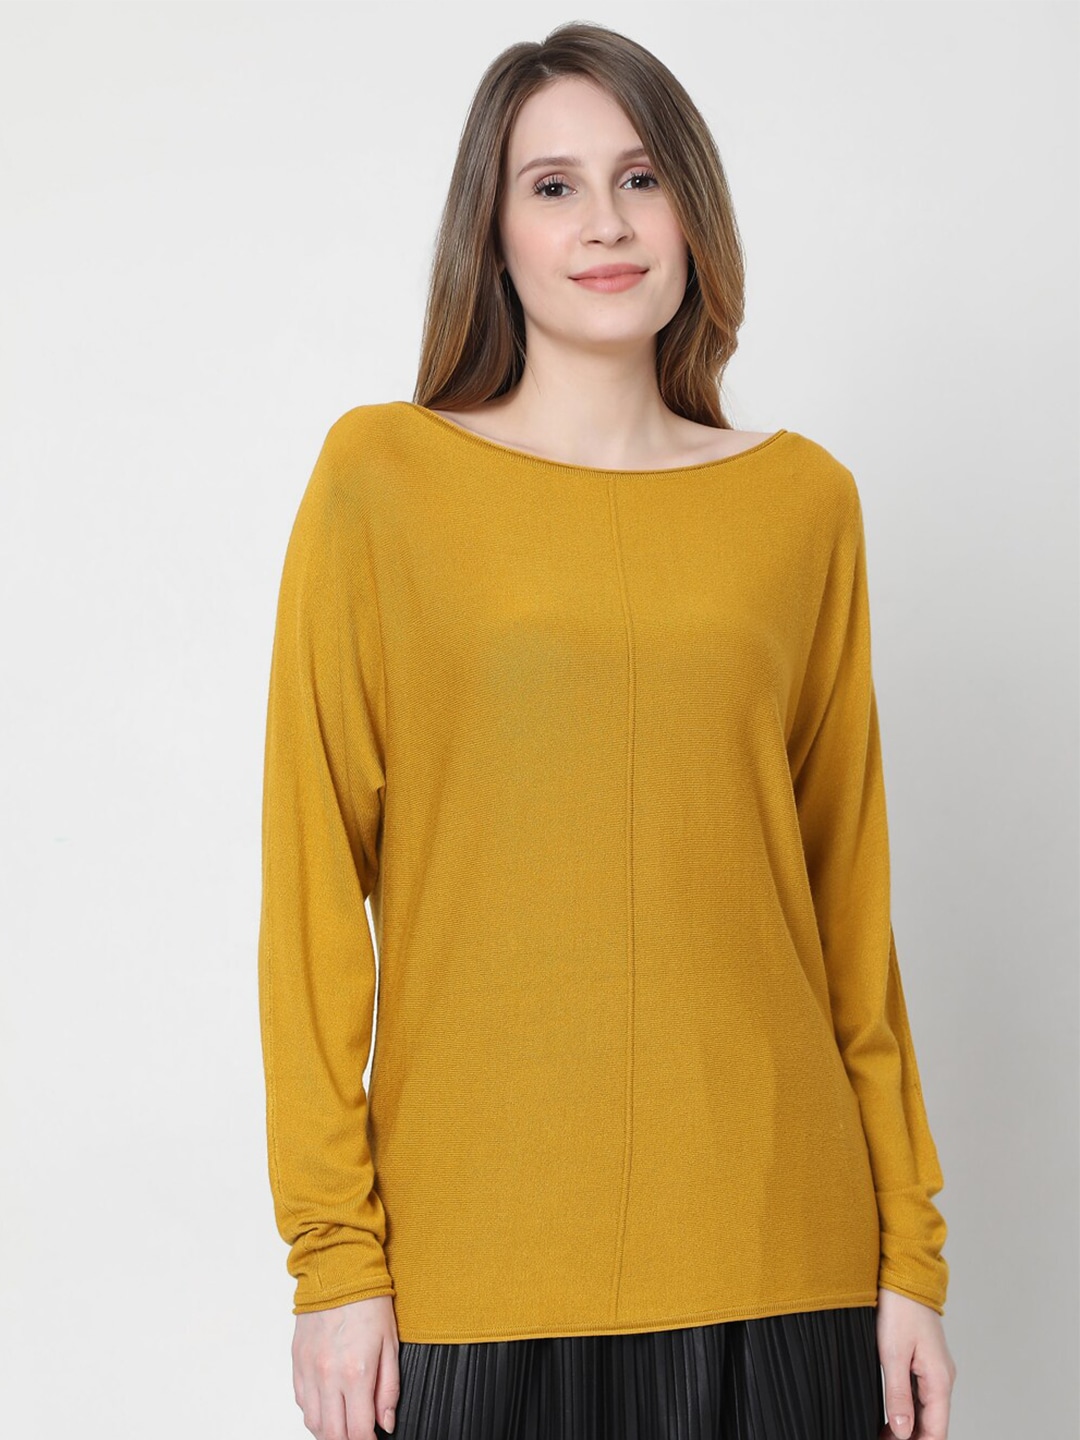 Vero Moda Women Gold-Toned Solid Pullover Sweater Price in India